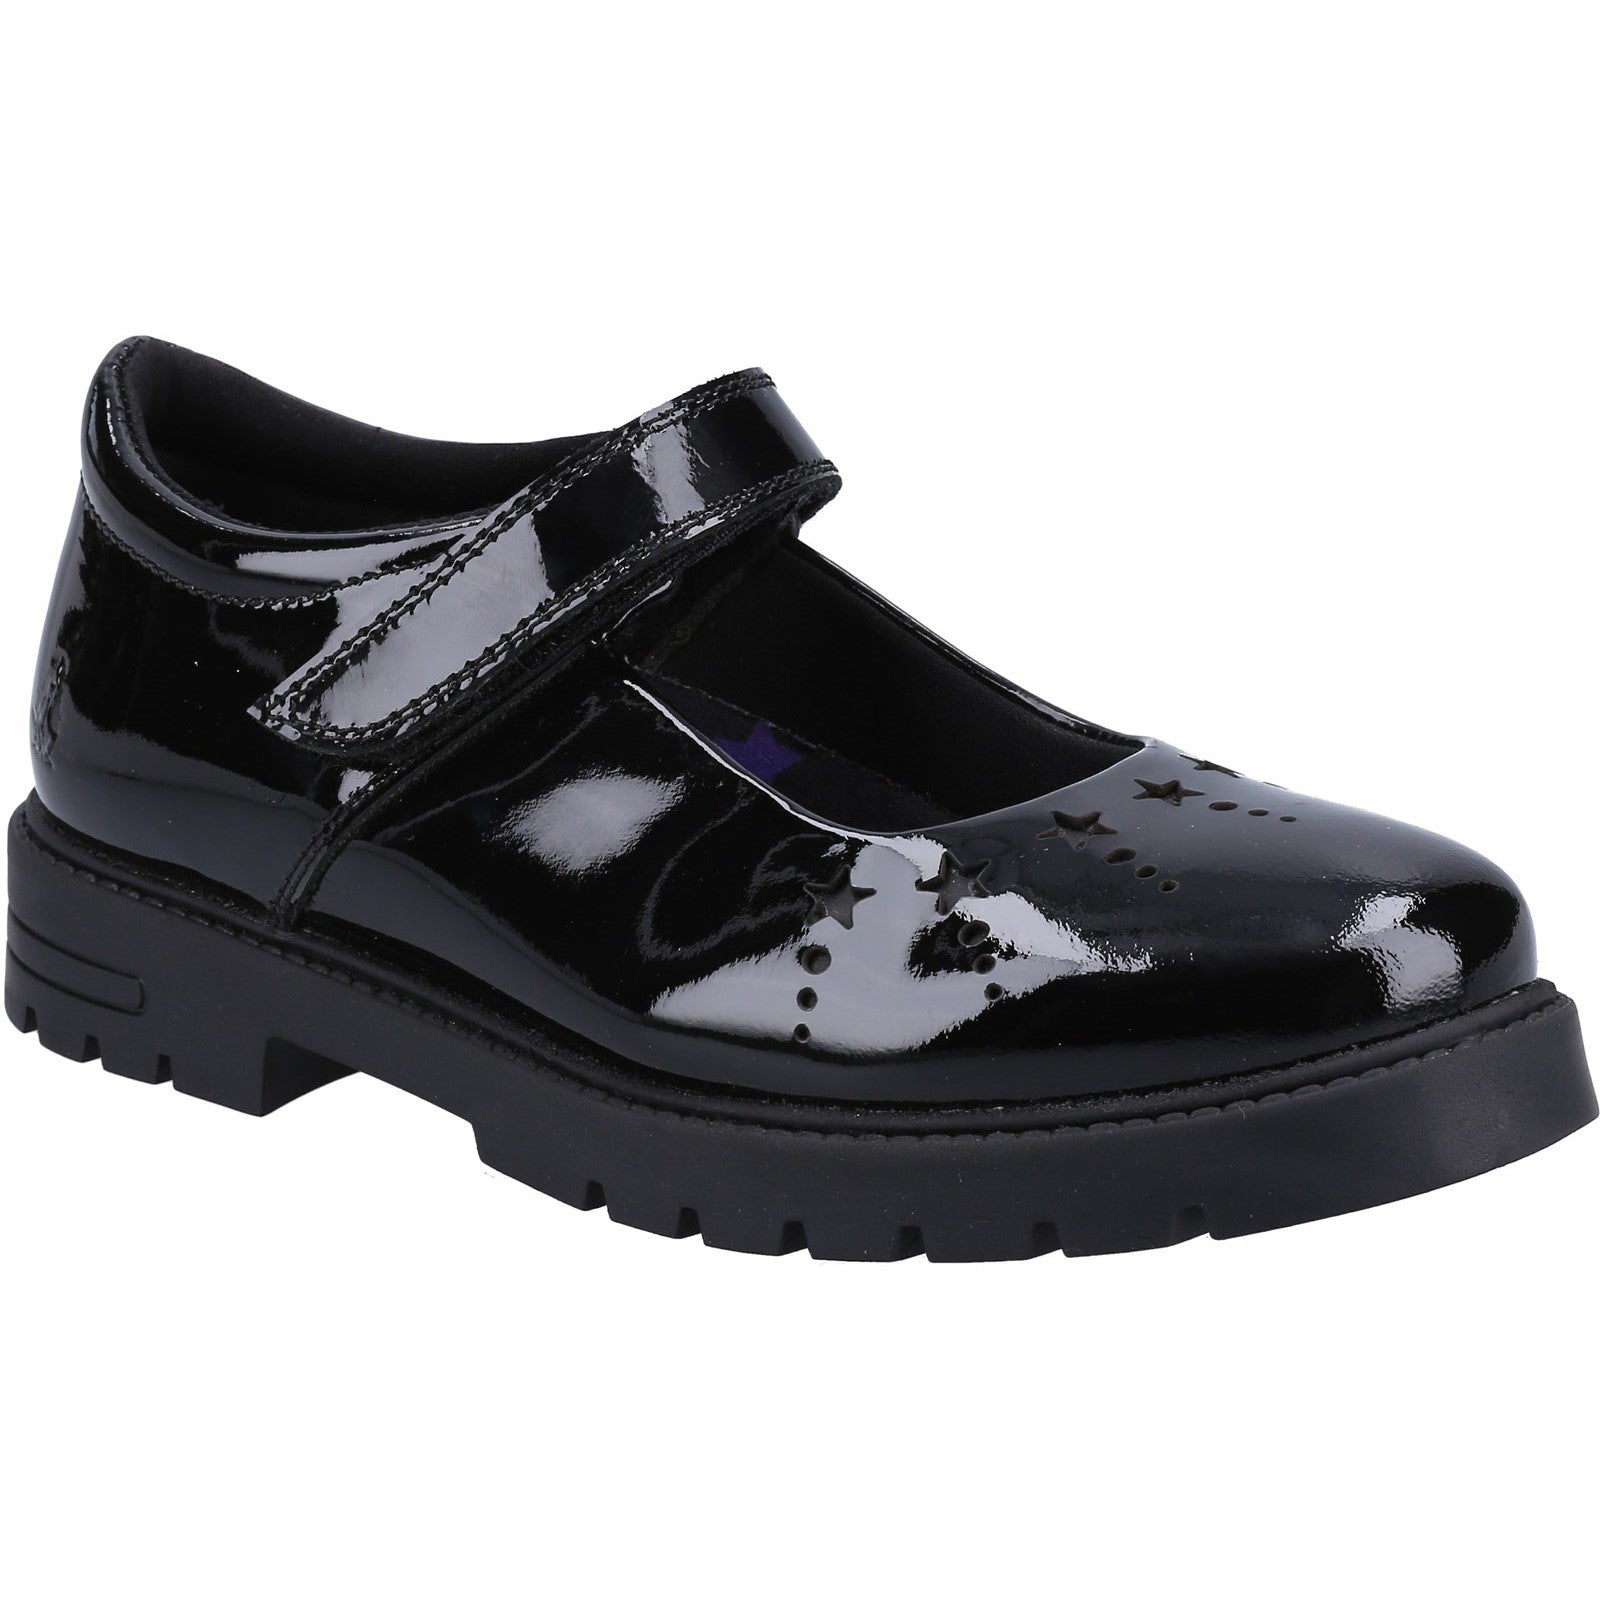 Hush Puppies Girls Sabrina Patent Leather Shoe Shoes - Black